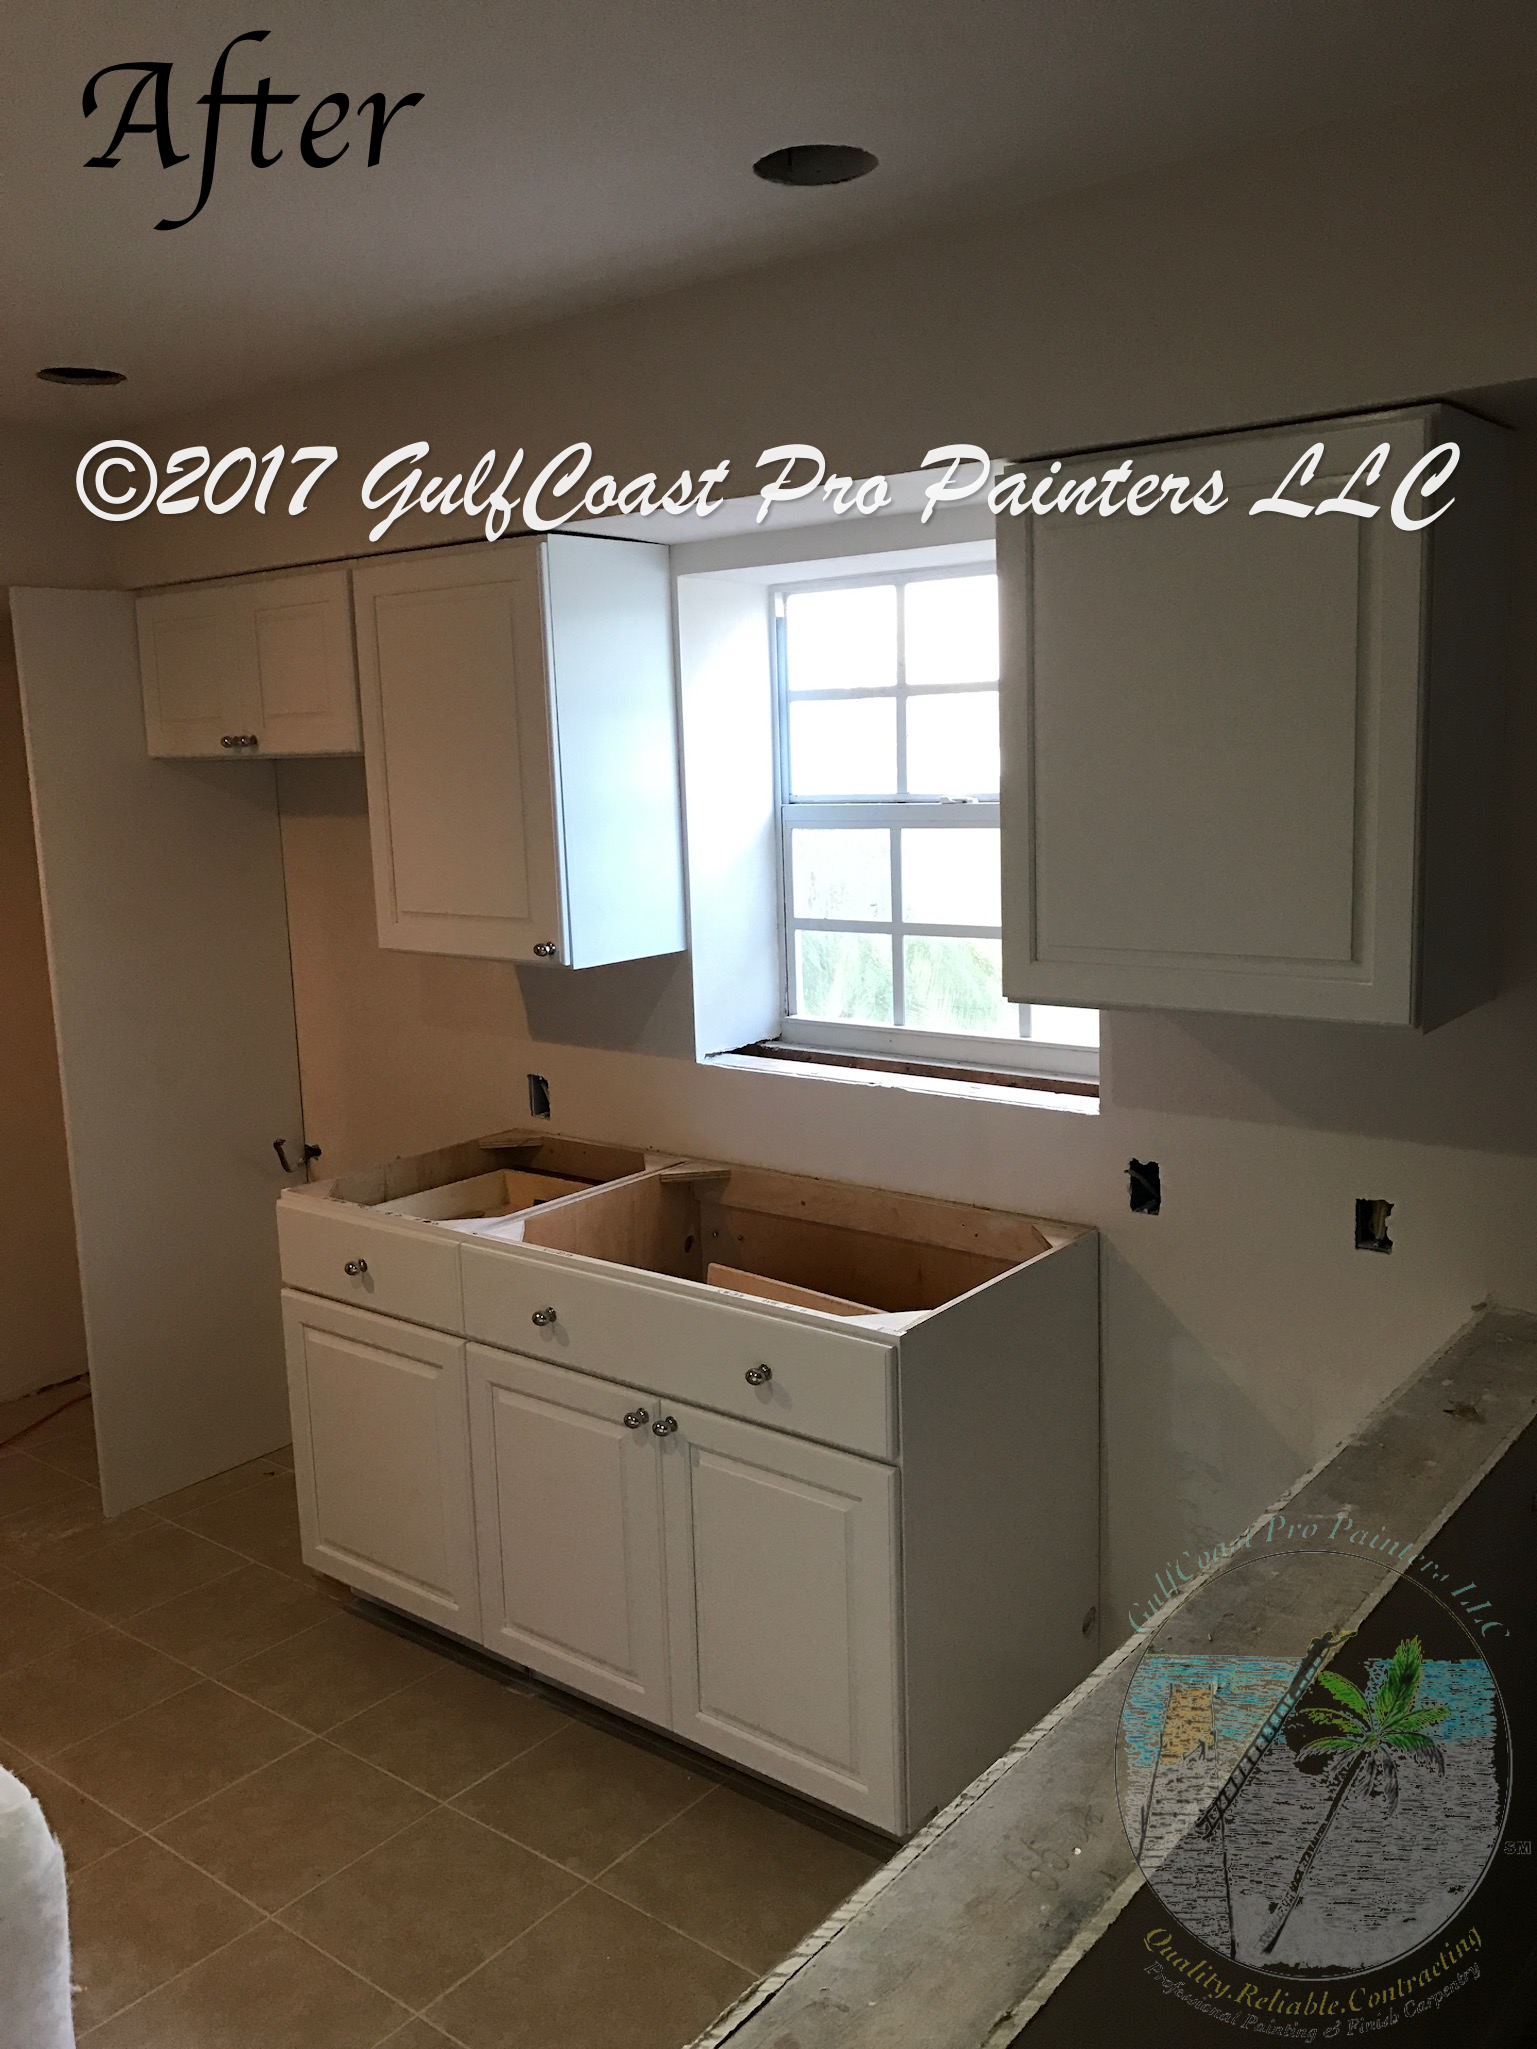 White Kitchen Cabinet Refinishing March 2017 Watermarked2 (1).jpg